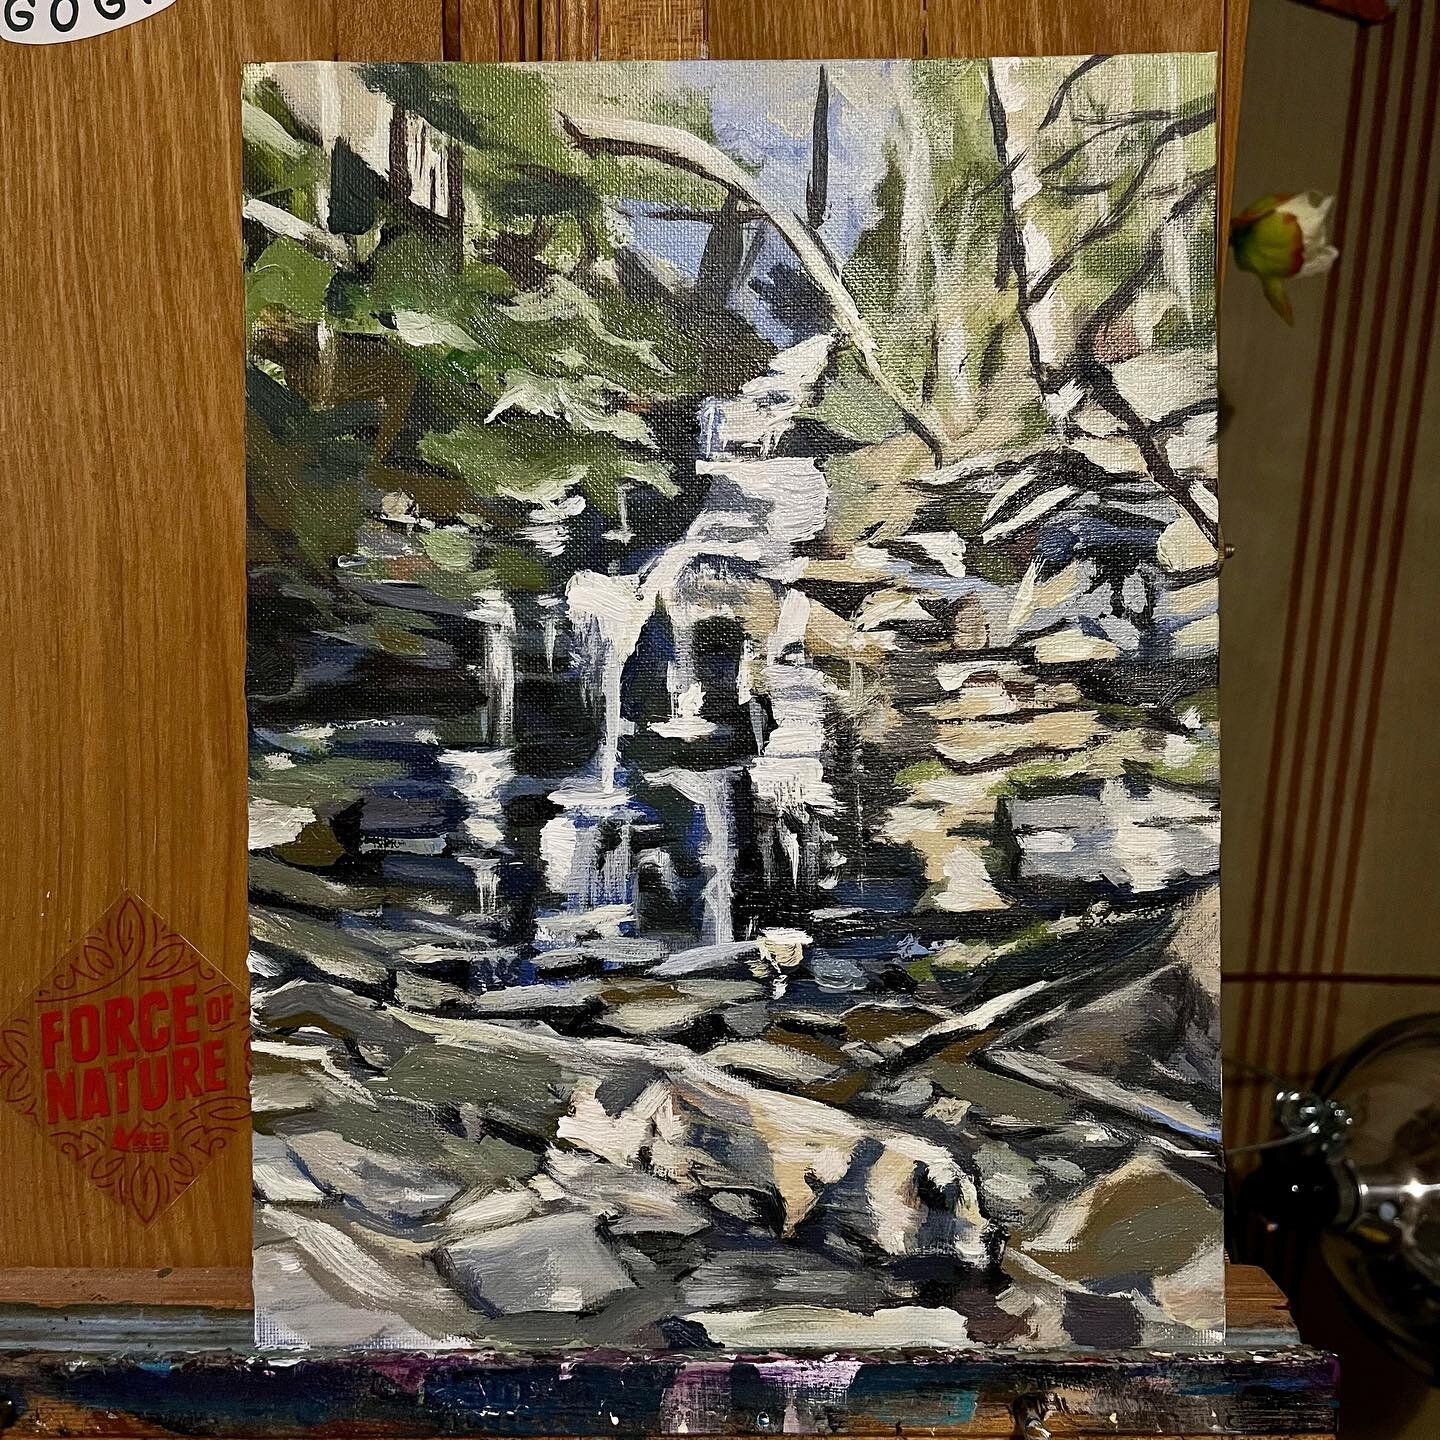 Another little WIP #landscapepainting #waterfall #rickettsglen #landscape #painting #practice #wip #workinprogress